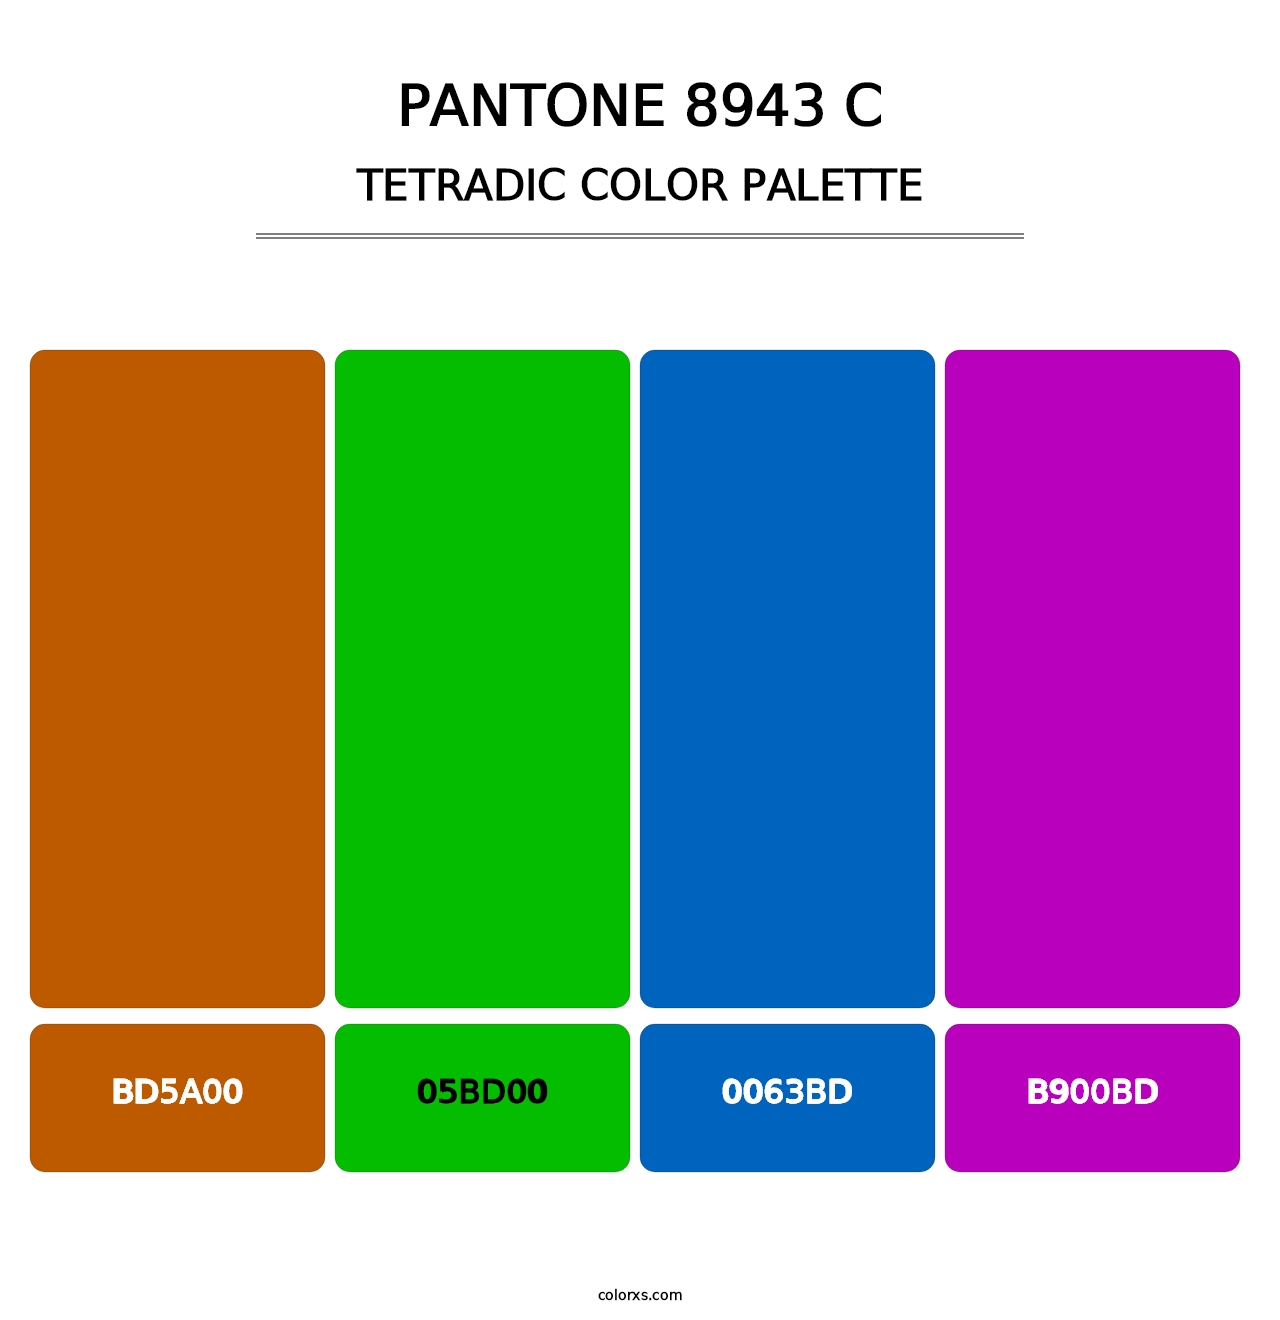 PANTONE 8943 C - Tetradic Color Palette